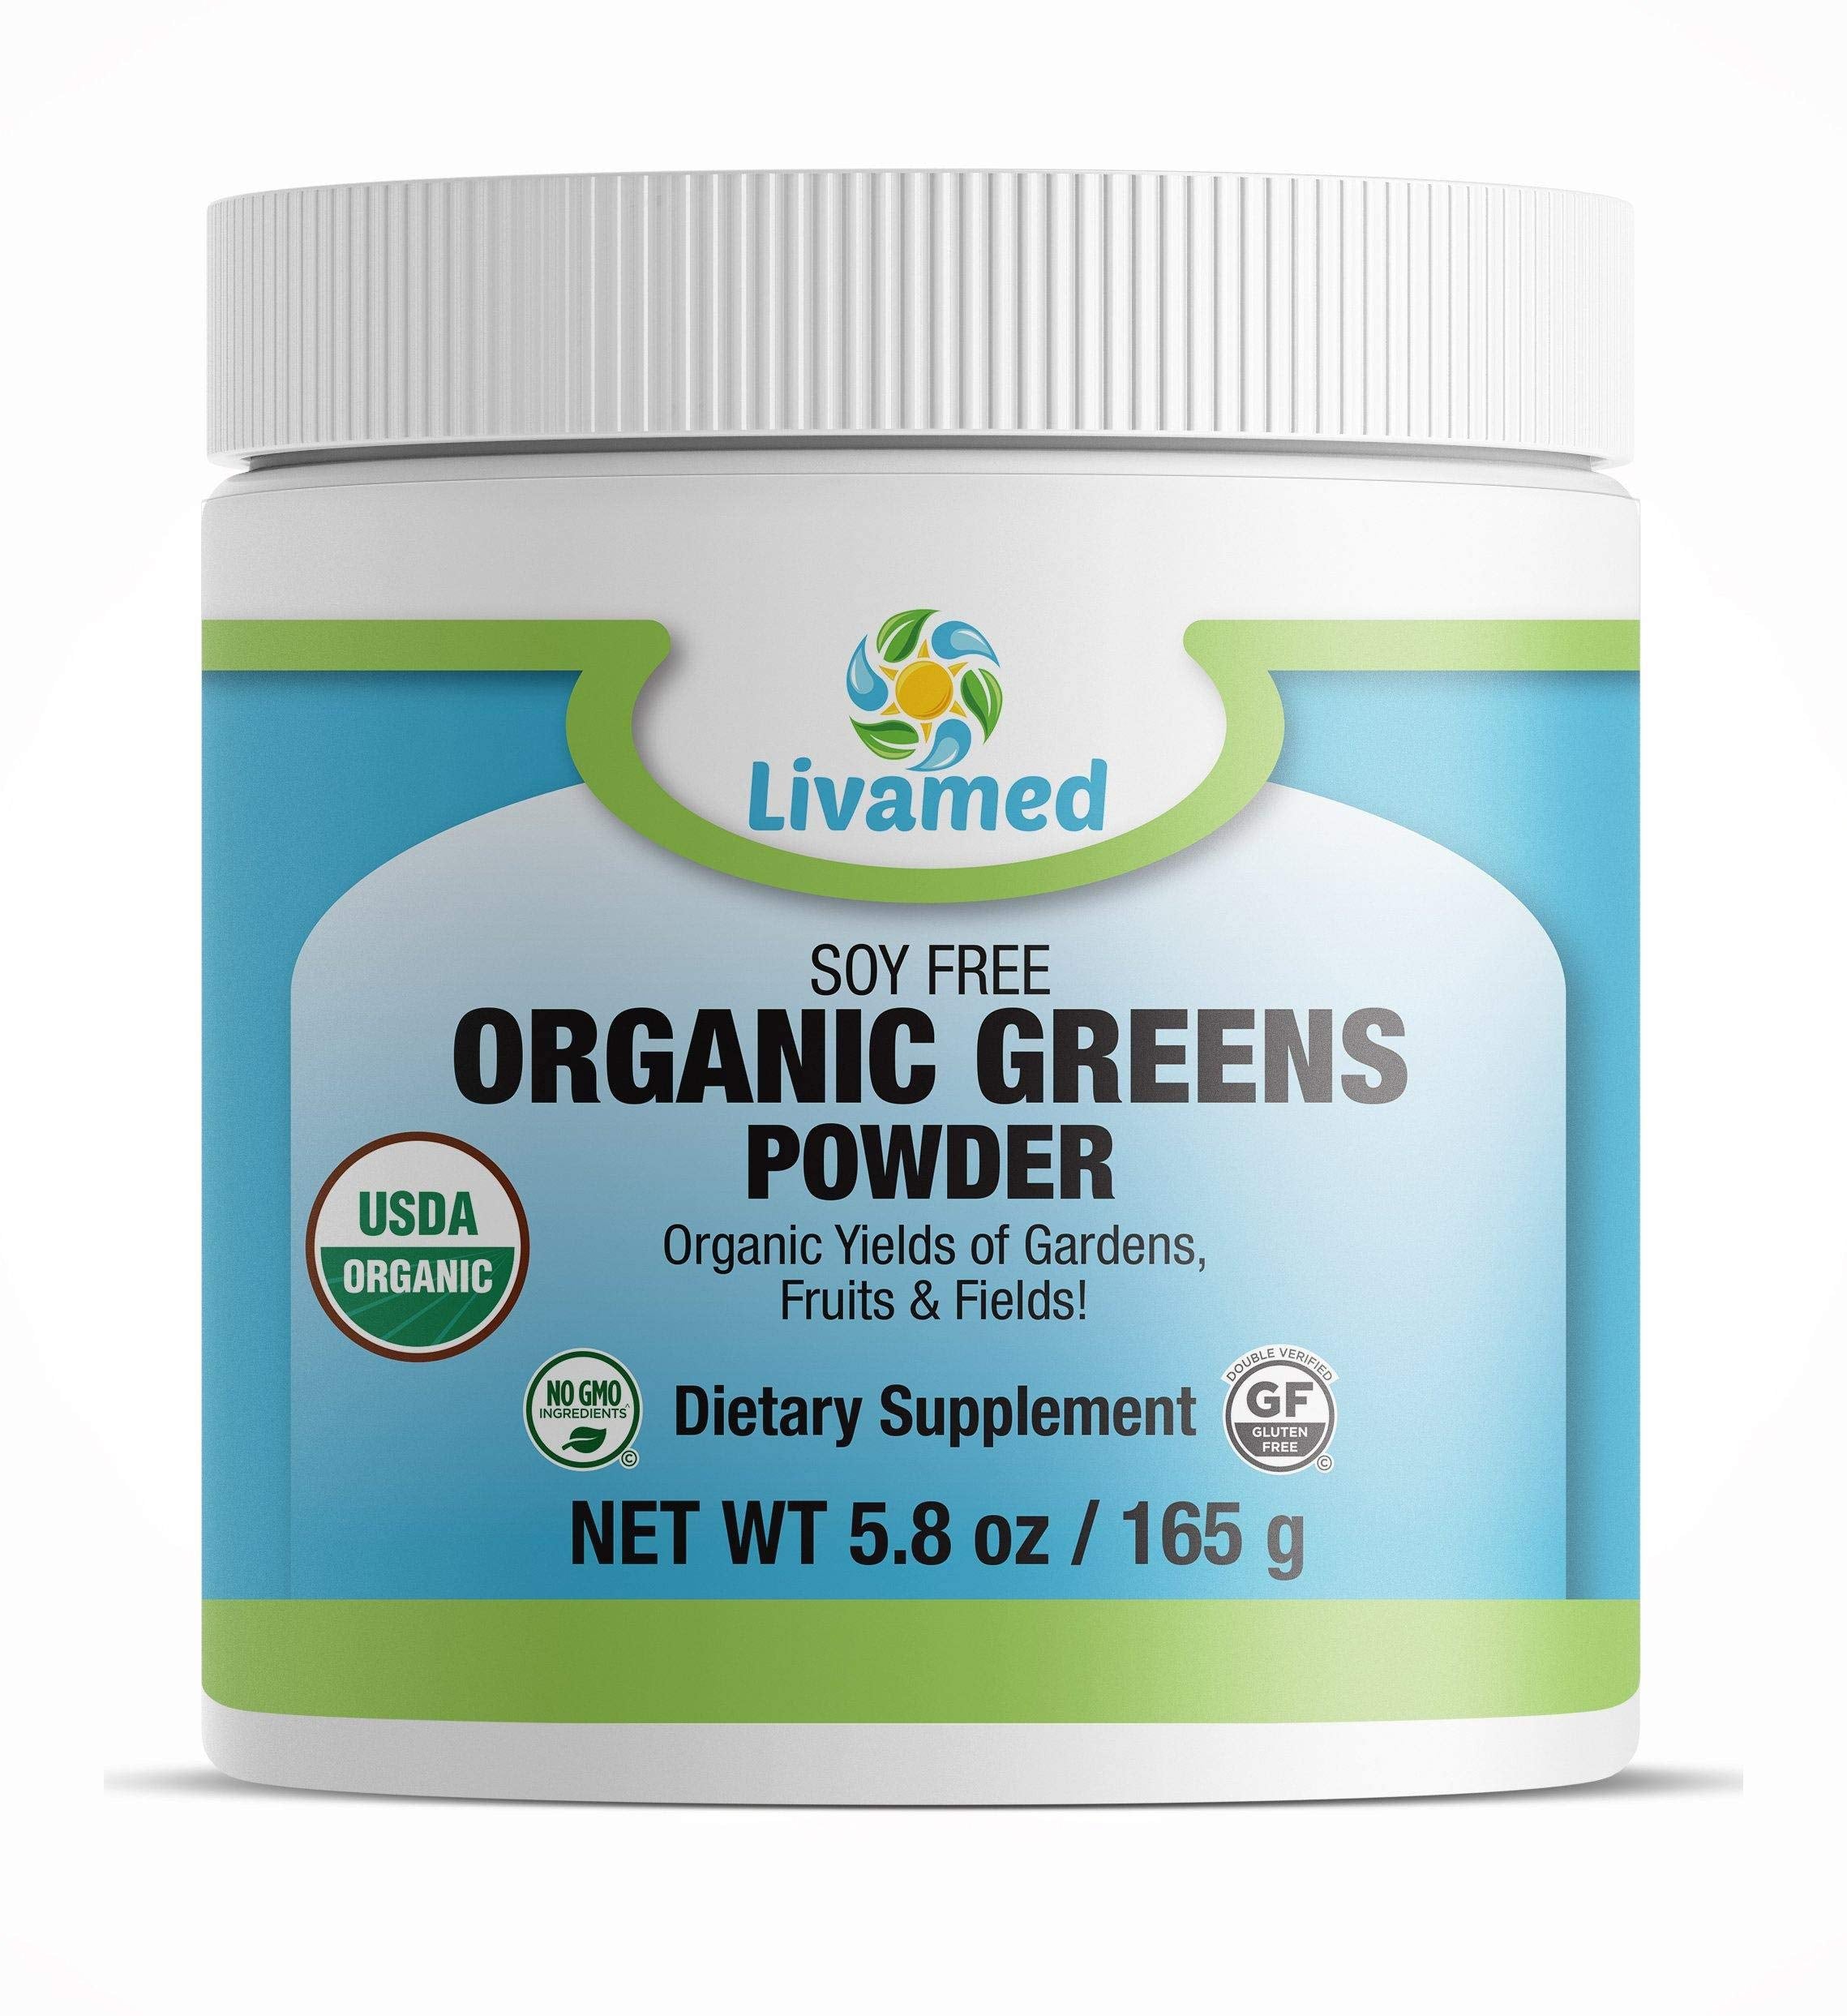 Livamed - Organic Greens Powder Soy Free 5.8 oz Count